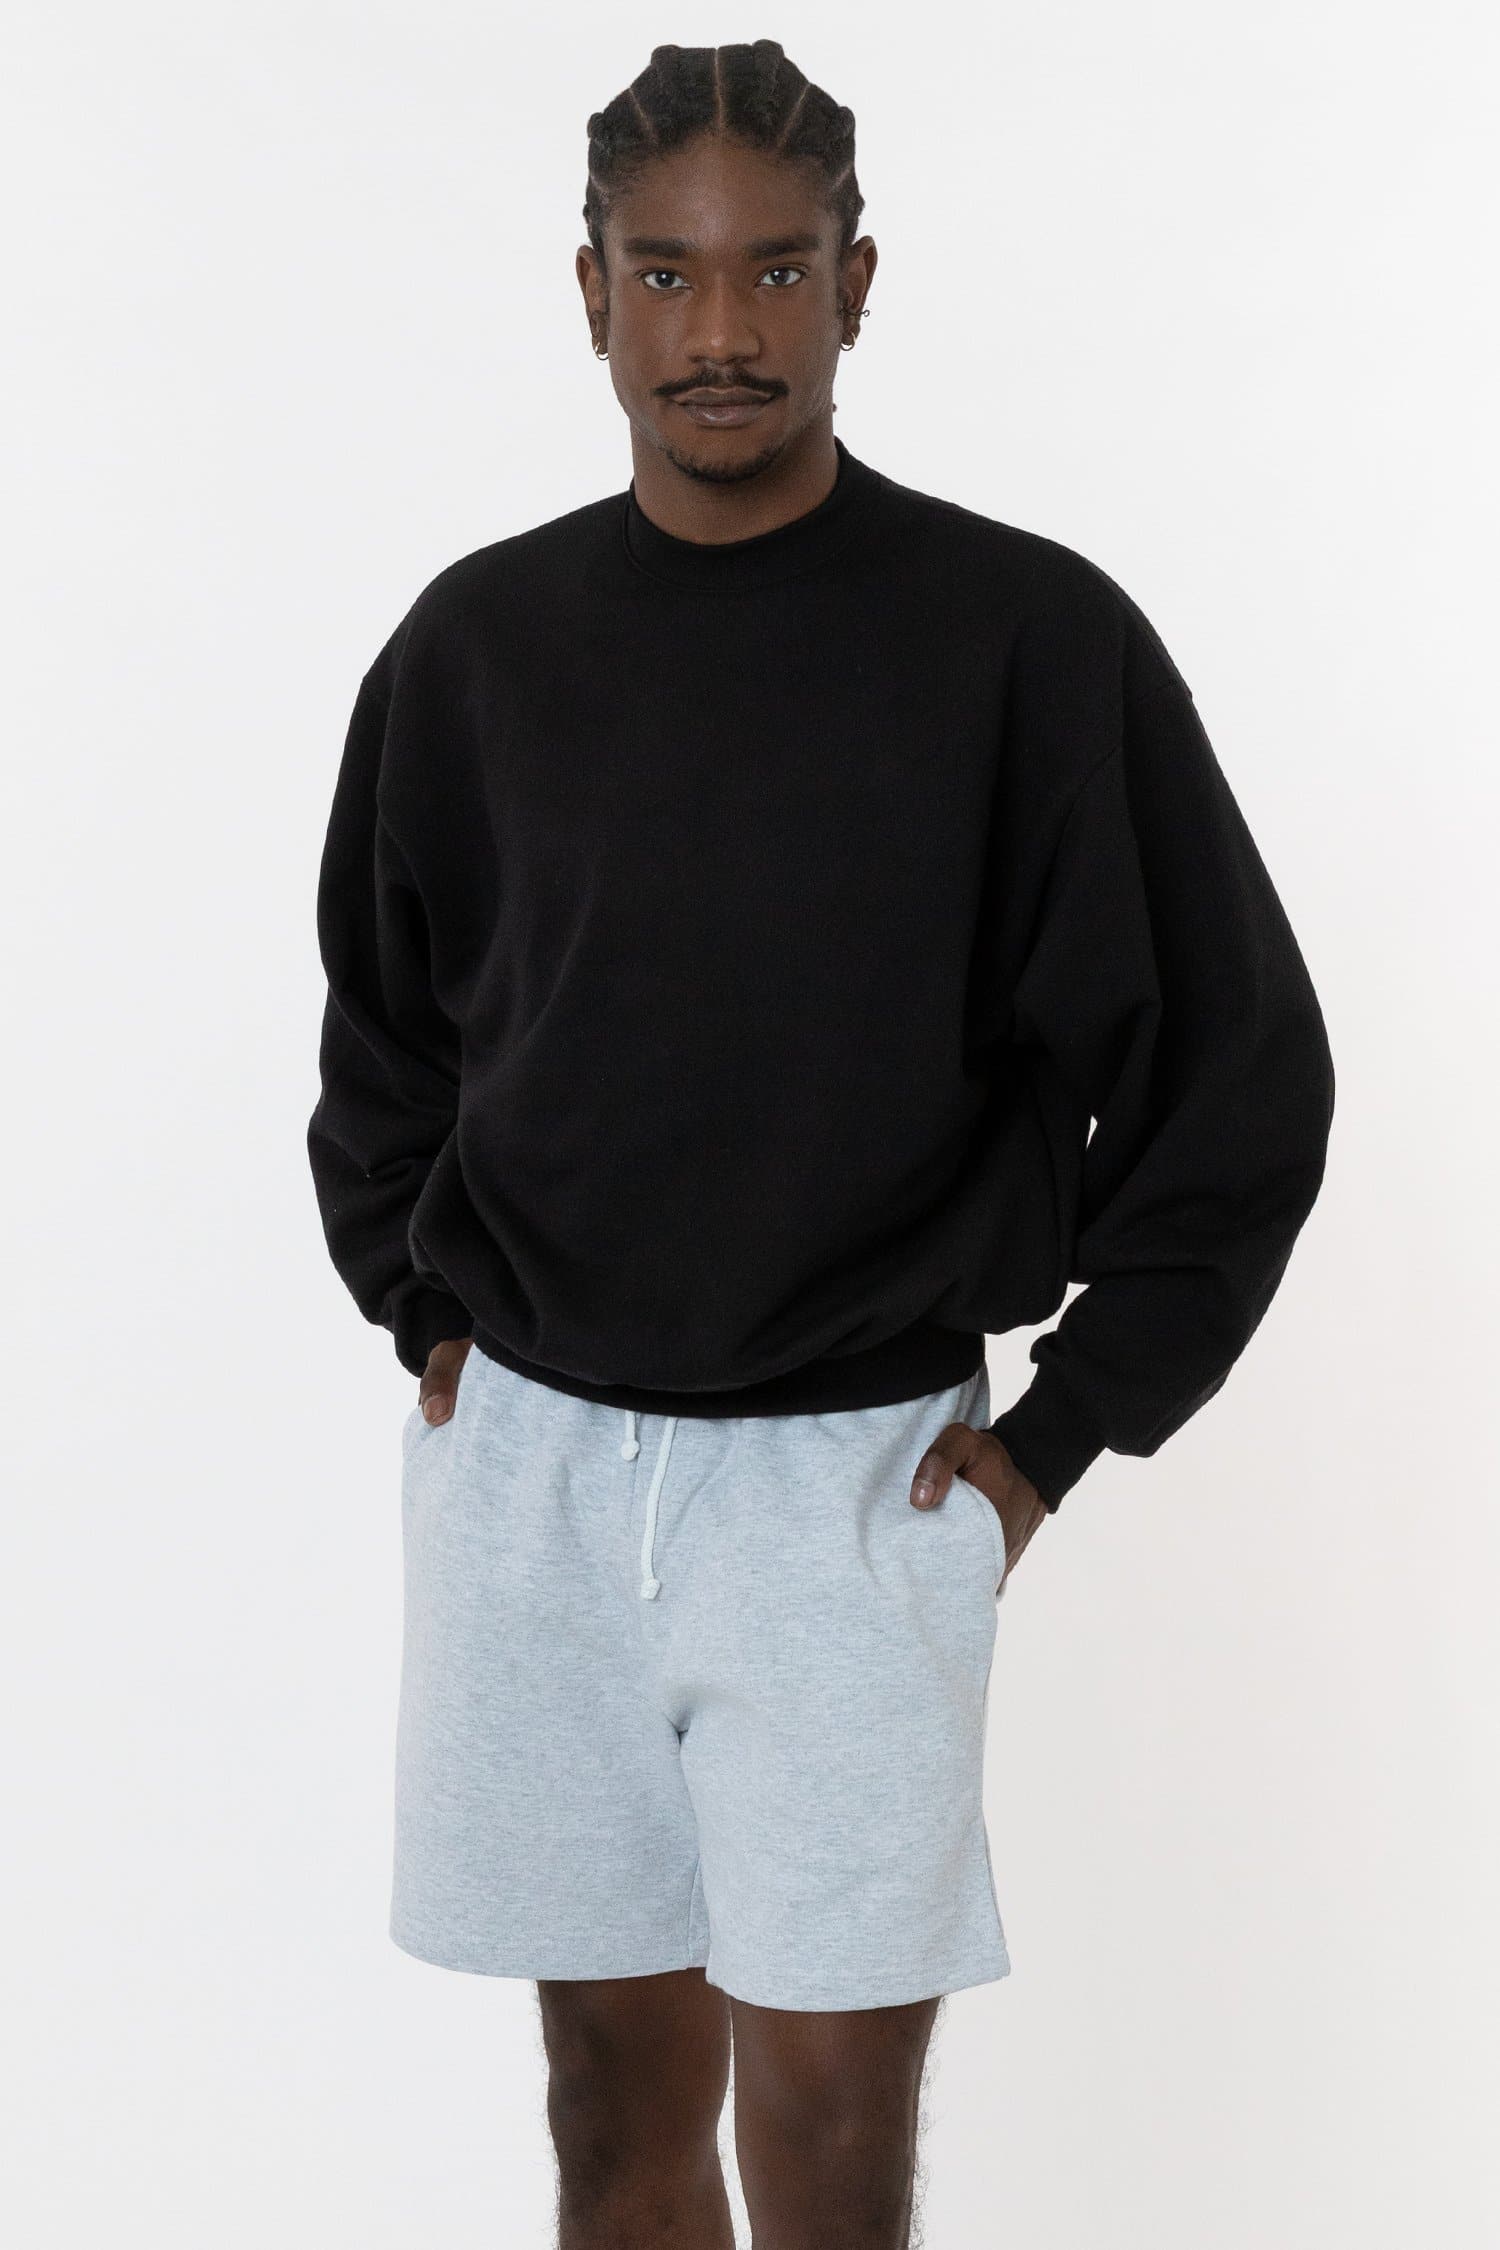 Los Angeles Apparel | Garment Dye Heavy Fleece Pullover Crewneck Sweatshirt for Men in Off Black, Size Large